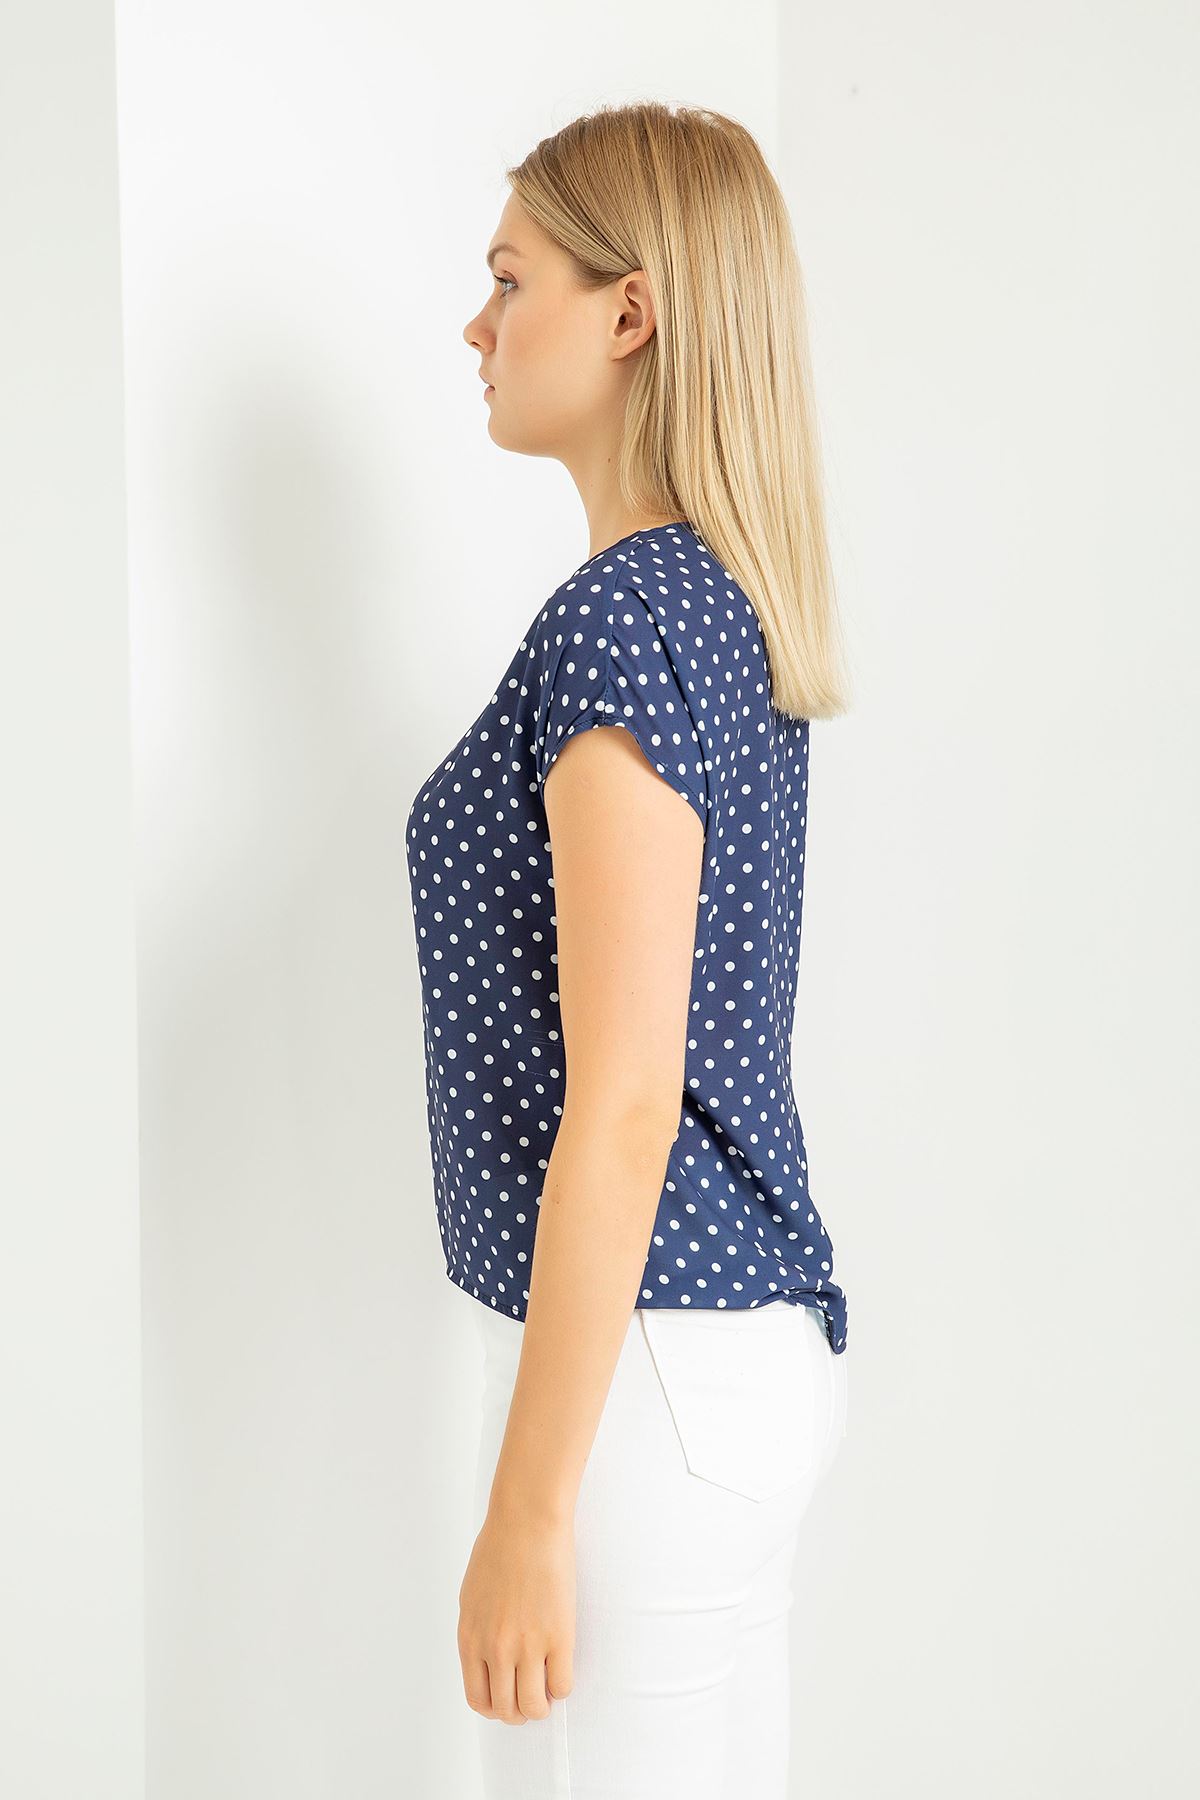 Jessica Blouse Short Sleeve V-Neck Dotted Print Blouse - Navy Blue 